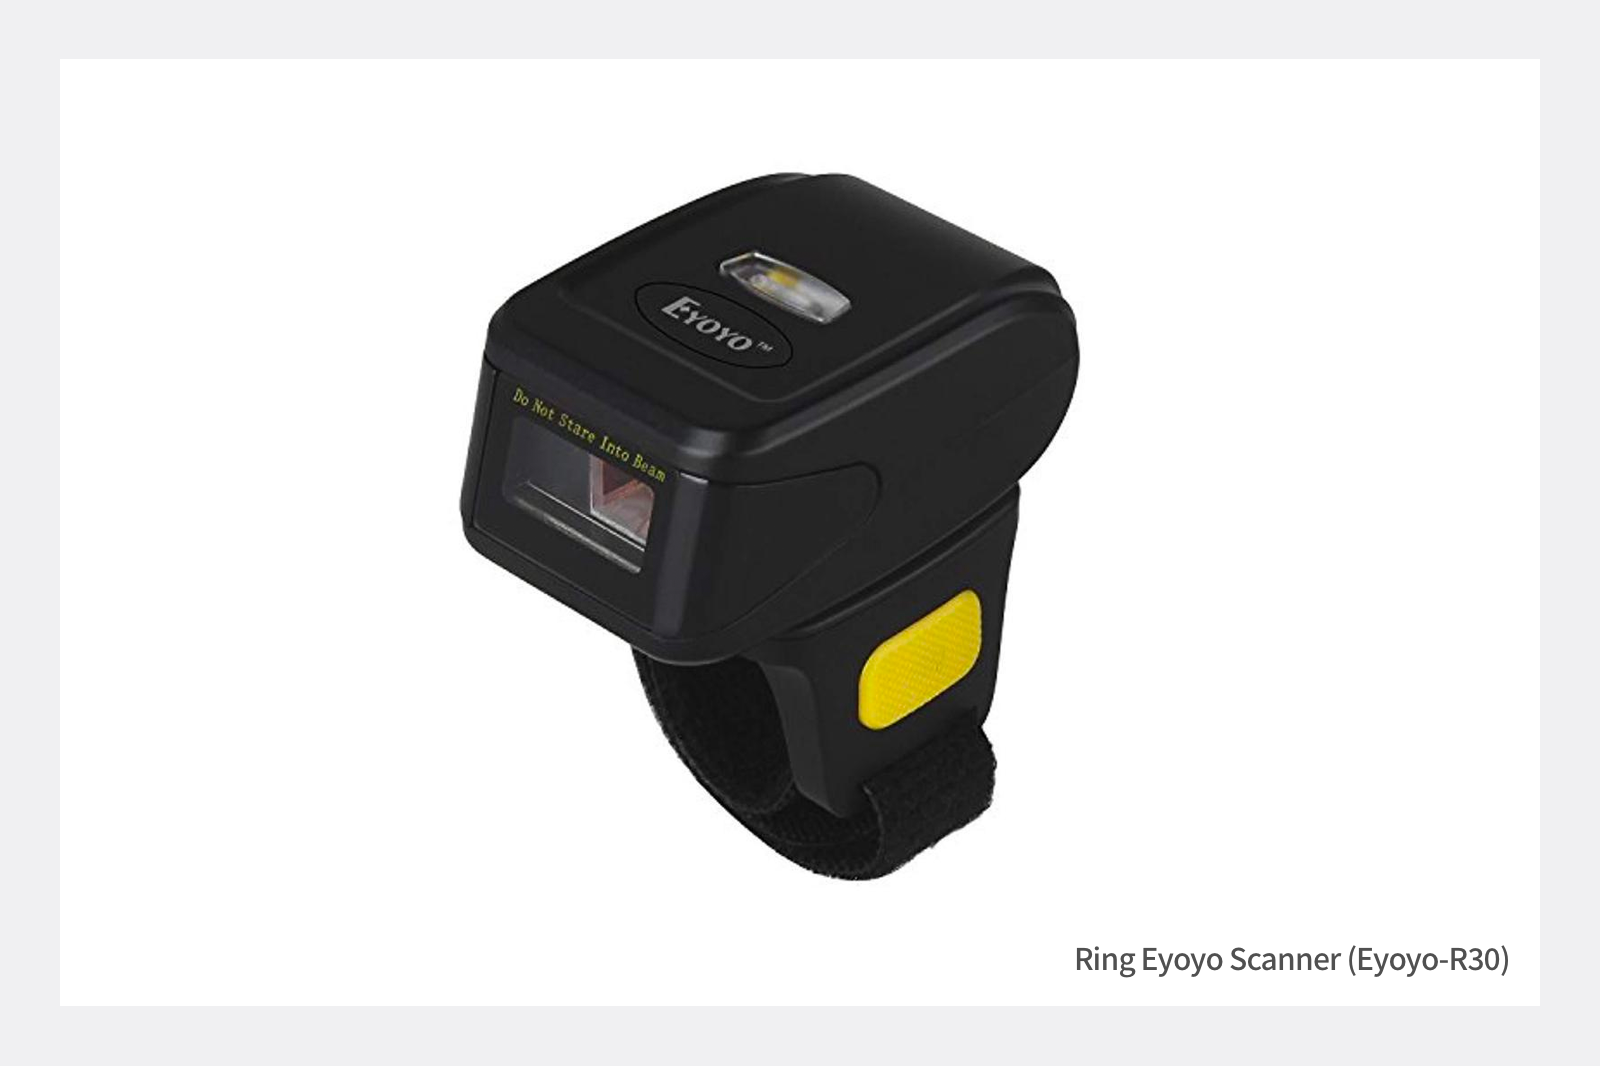 Eyoyo-R30 scanner